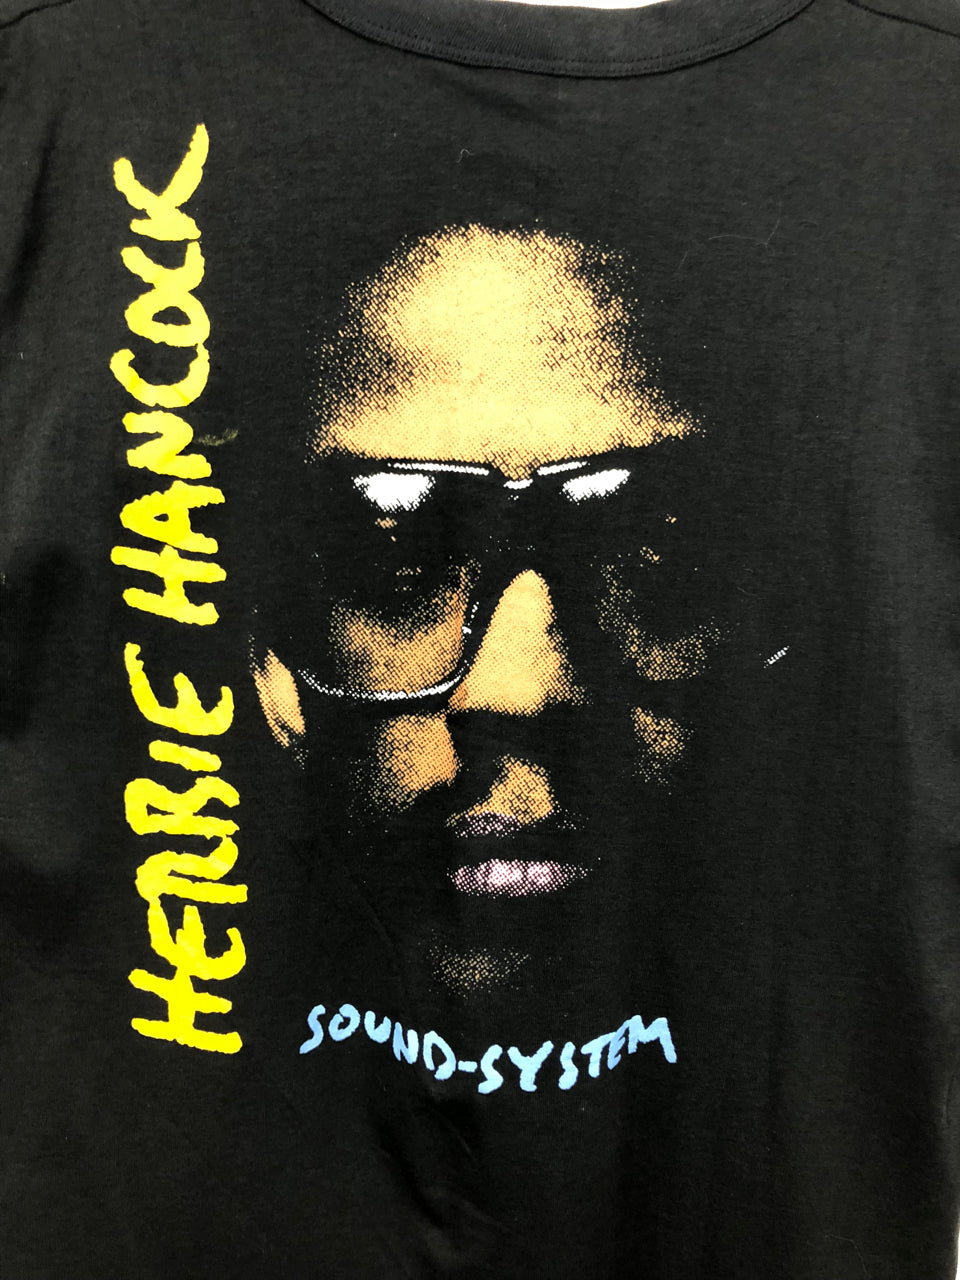 Herbie Hancock Tour 1984 "Sound-System" Sleeveless T-Shirt